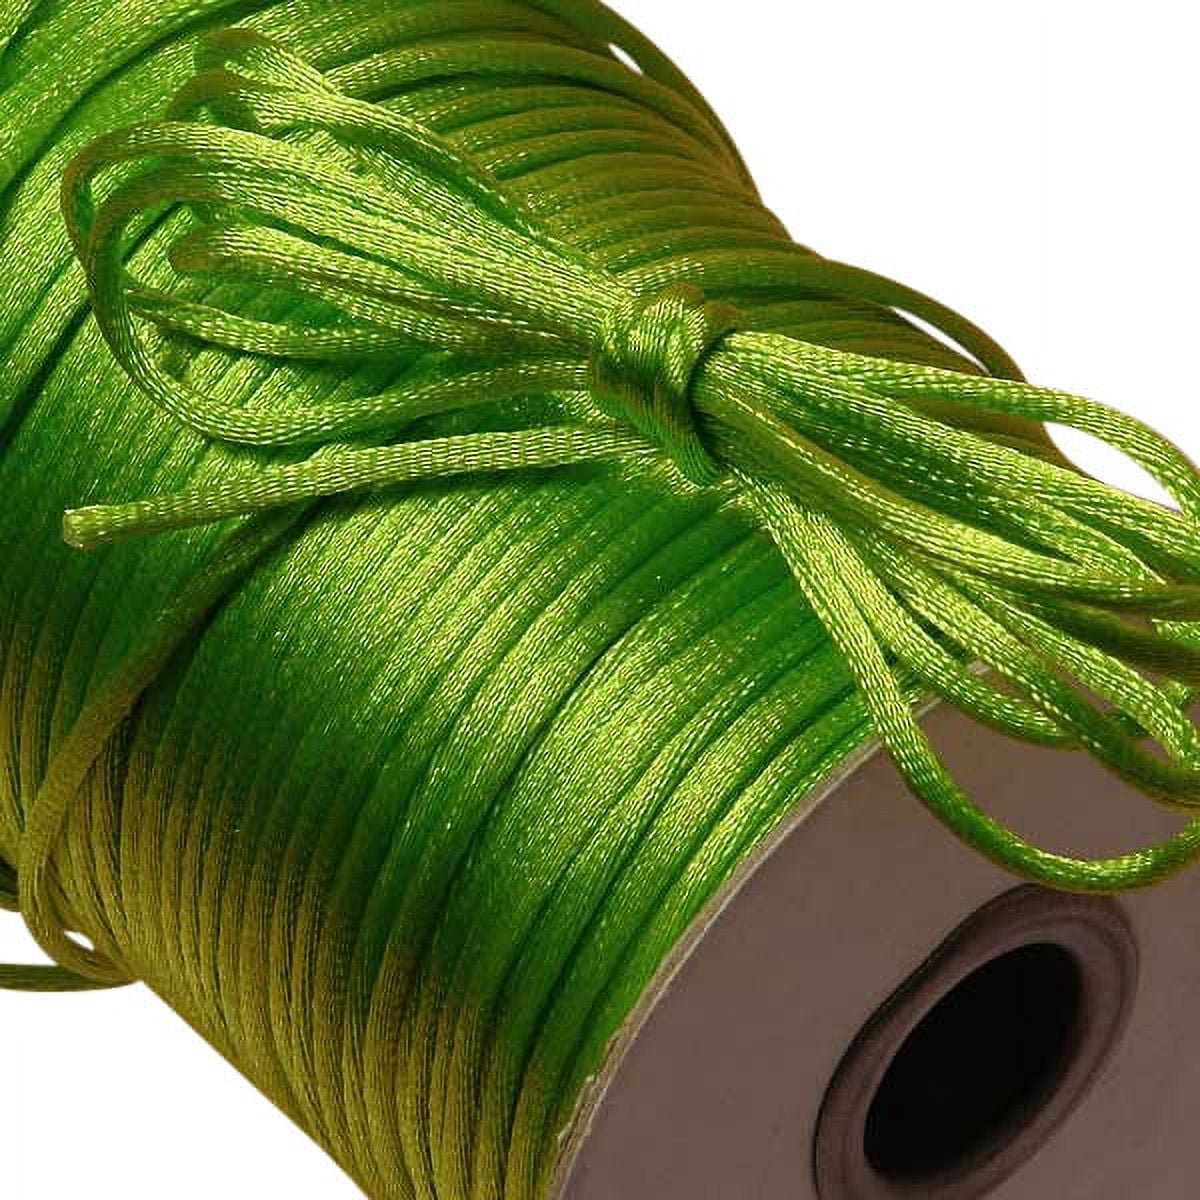 Turquoise Satin Cord 1mm, Silk Satin, Rattail Cord, Shamballa Cord,  Kumihimo Cord, Macrame Cord 4,5m/5 Yards Approx.1 Piece 